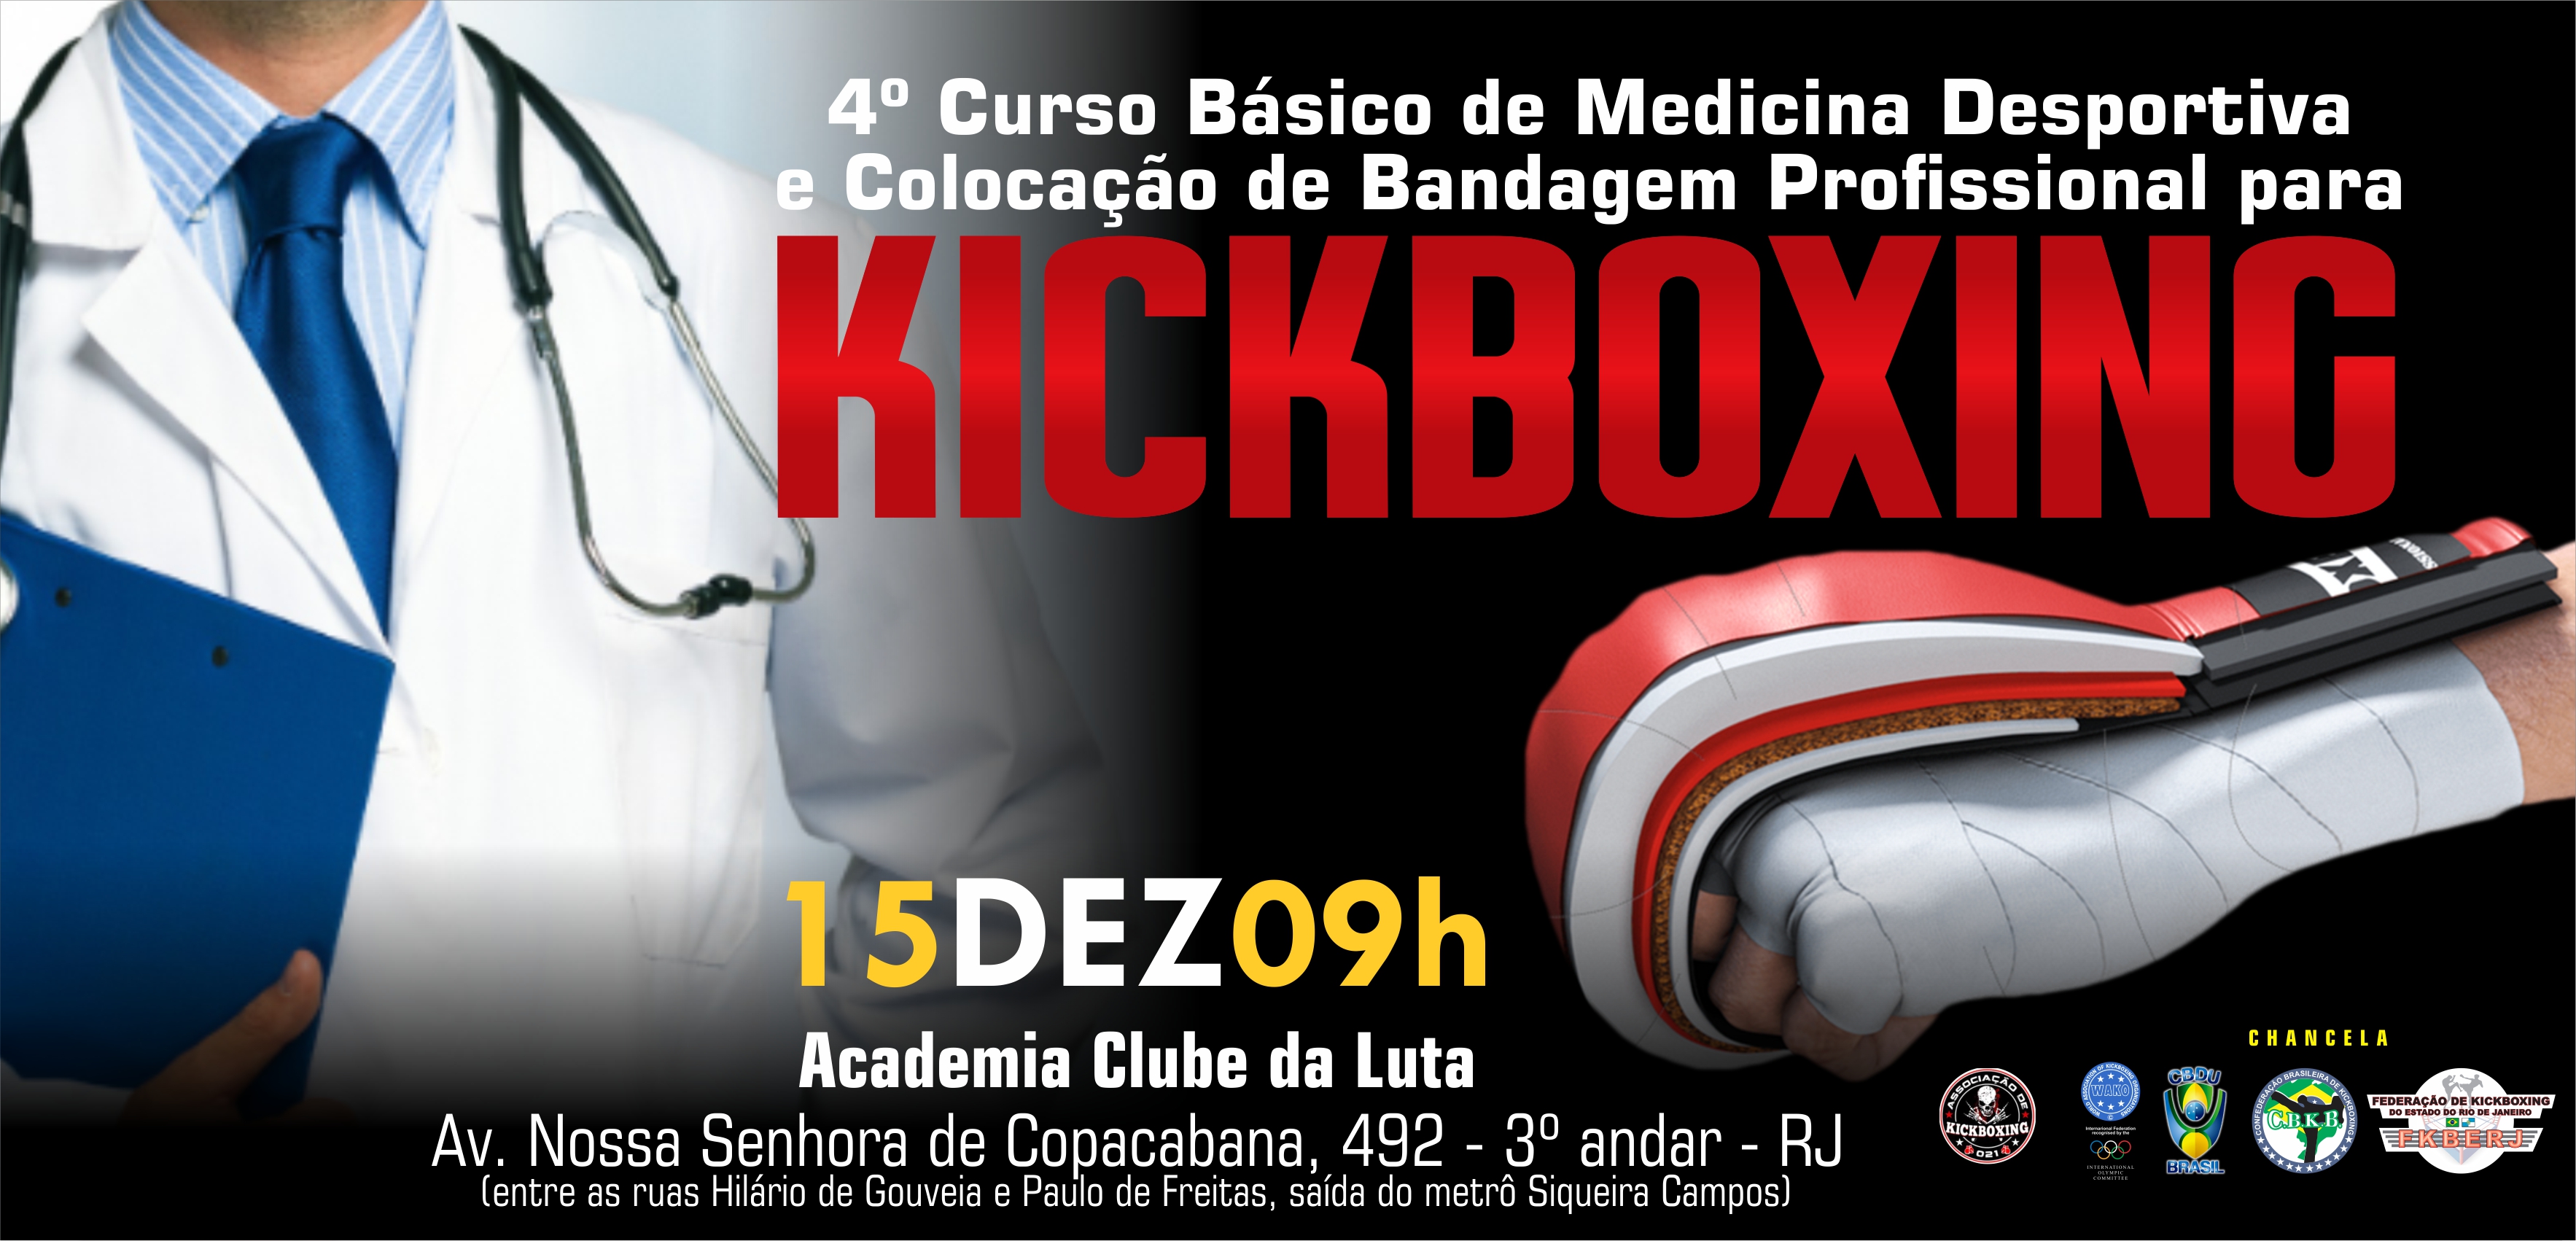 4º Curso Básico de Medicina Desportiva e Bandagem Pró para Kickboxing 2019